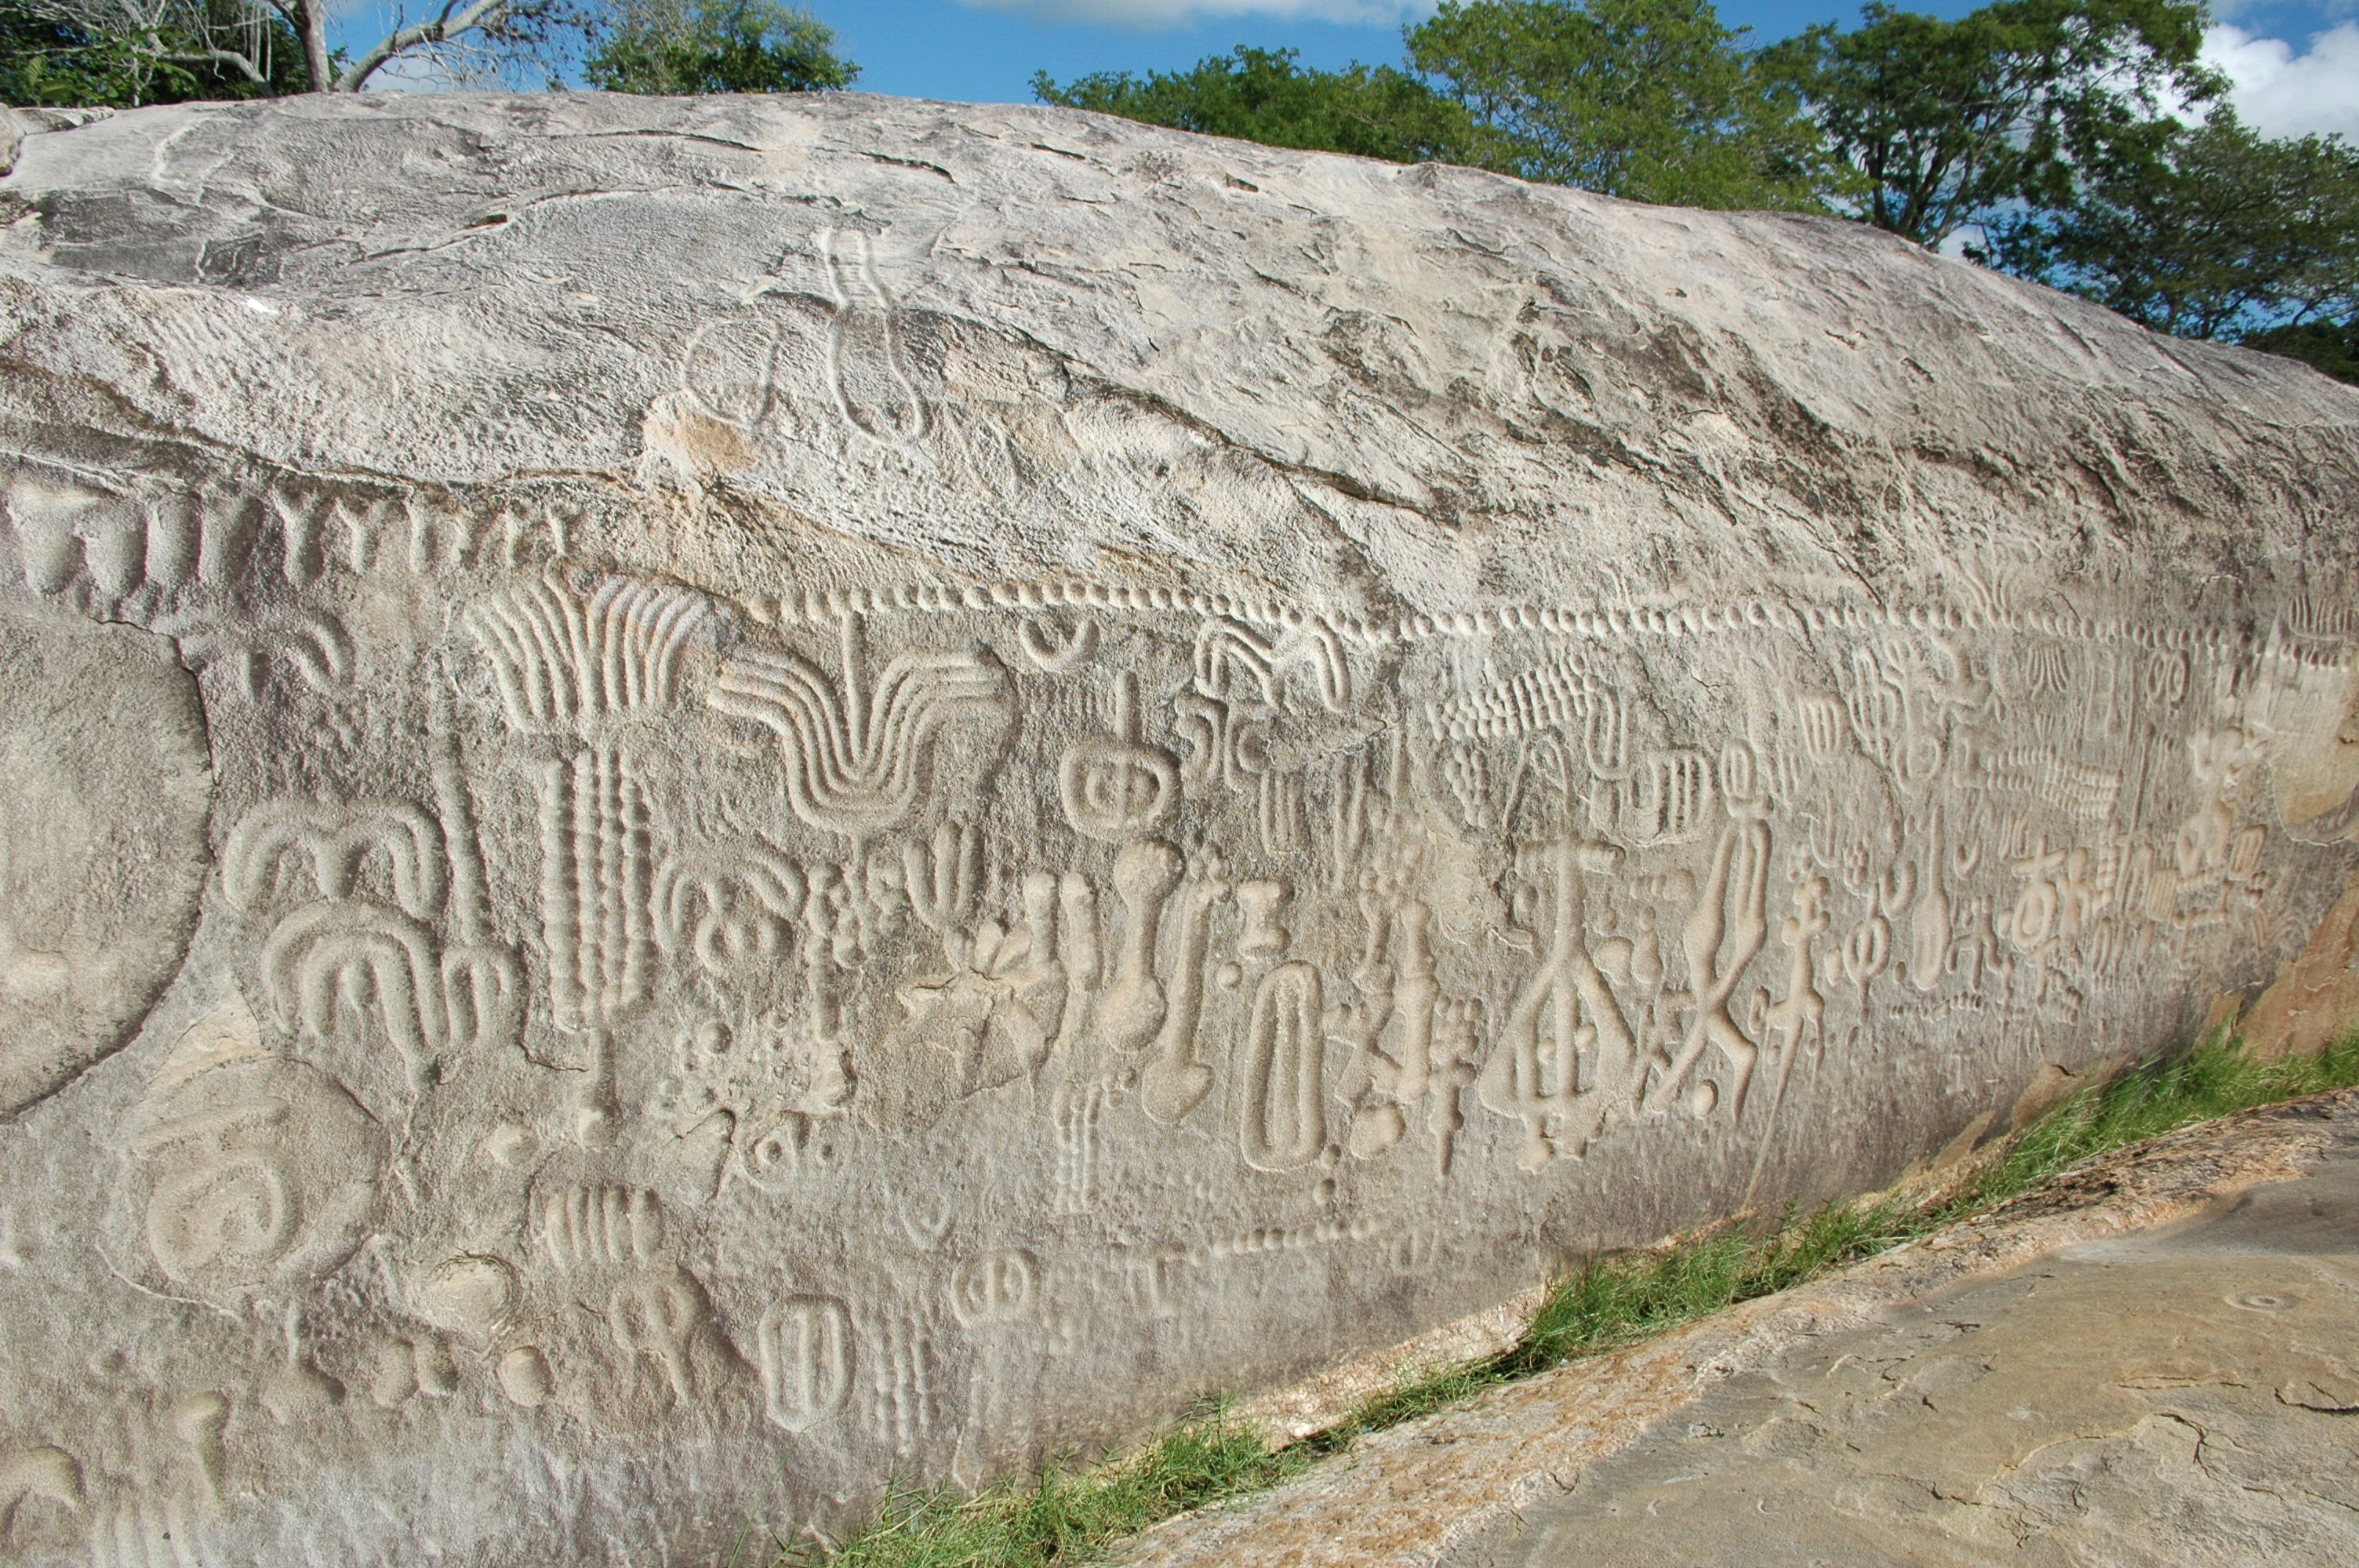 Pedra do Inga Brasile incisioni rupestri scolpite